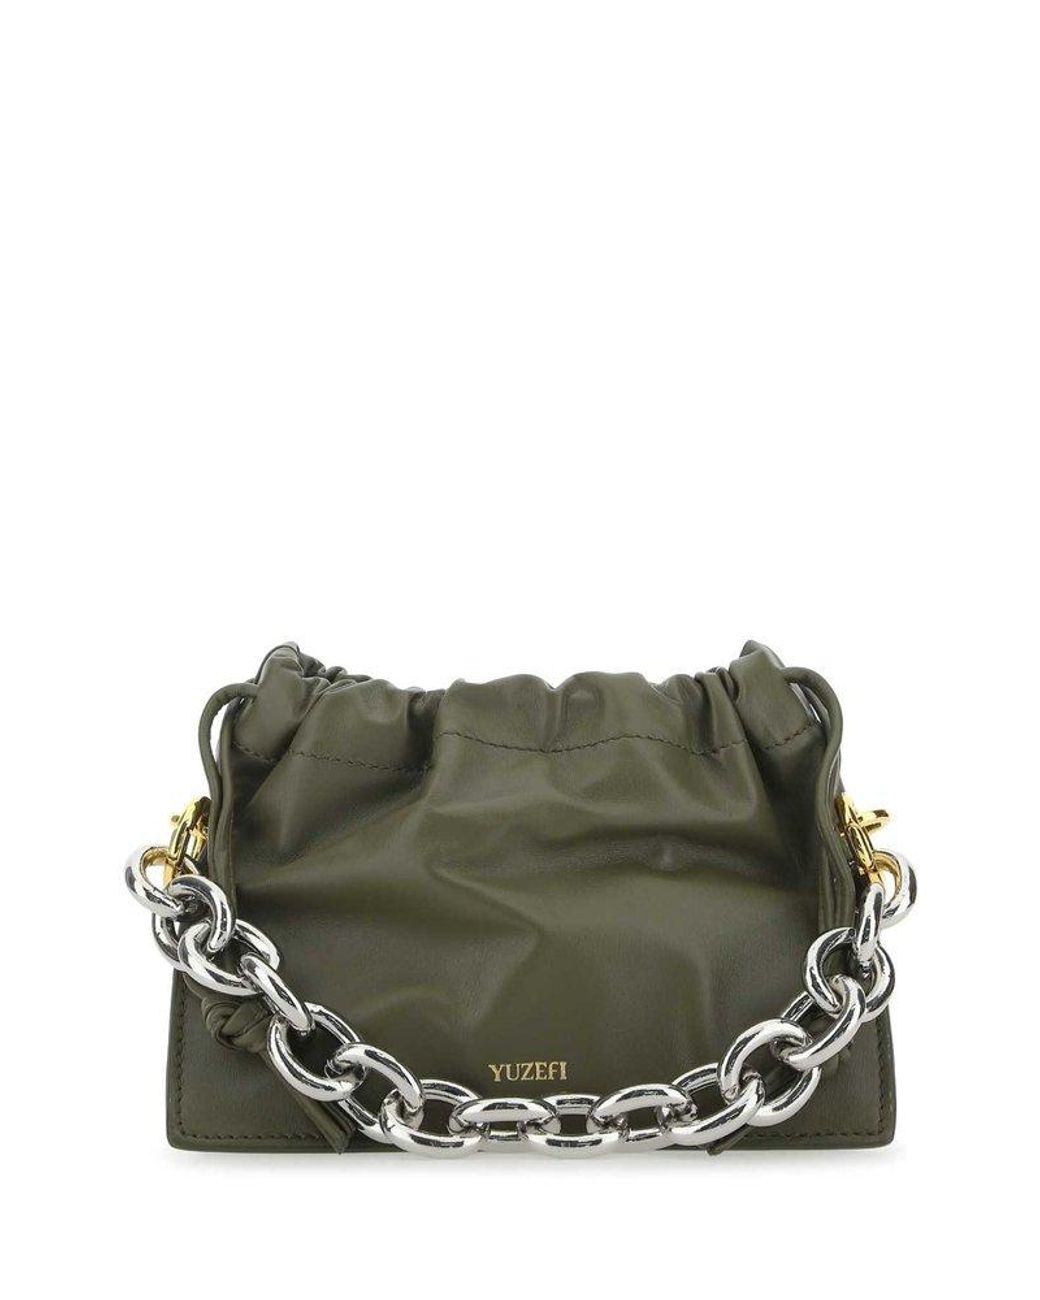 Yuzefi Mini Bom Crossbody Smooth Yellow Leather Bag | eBay